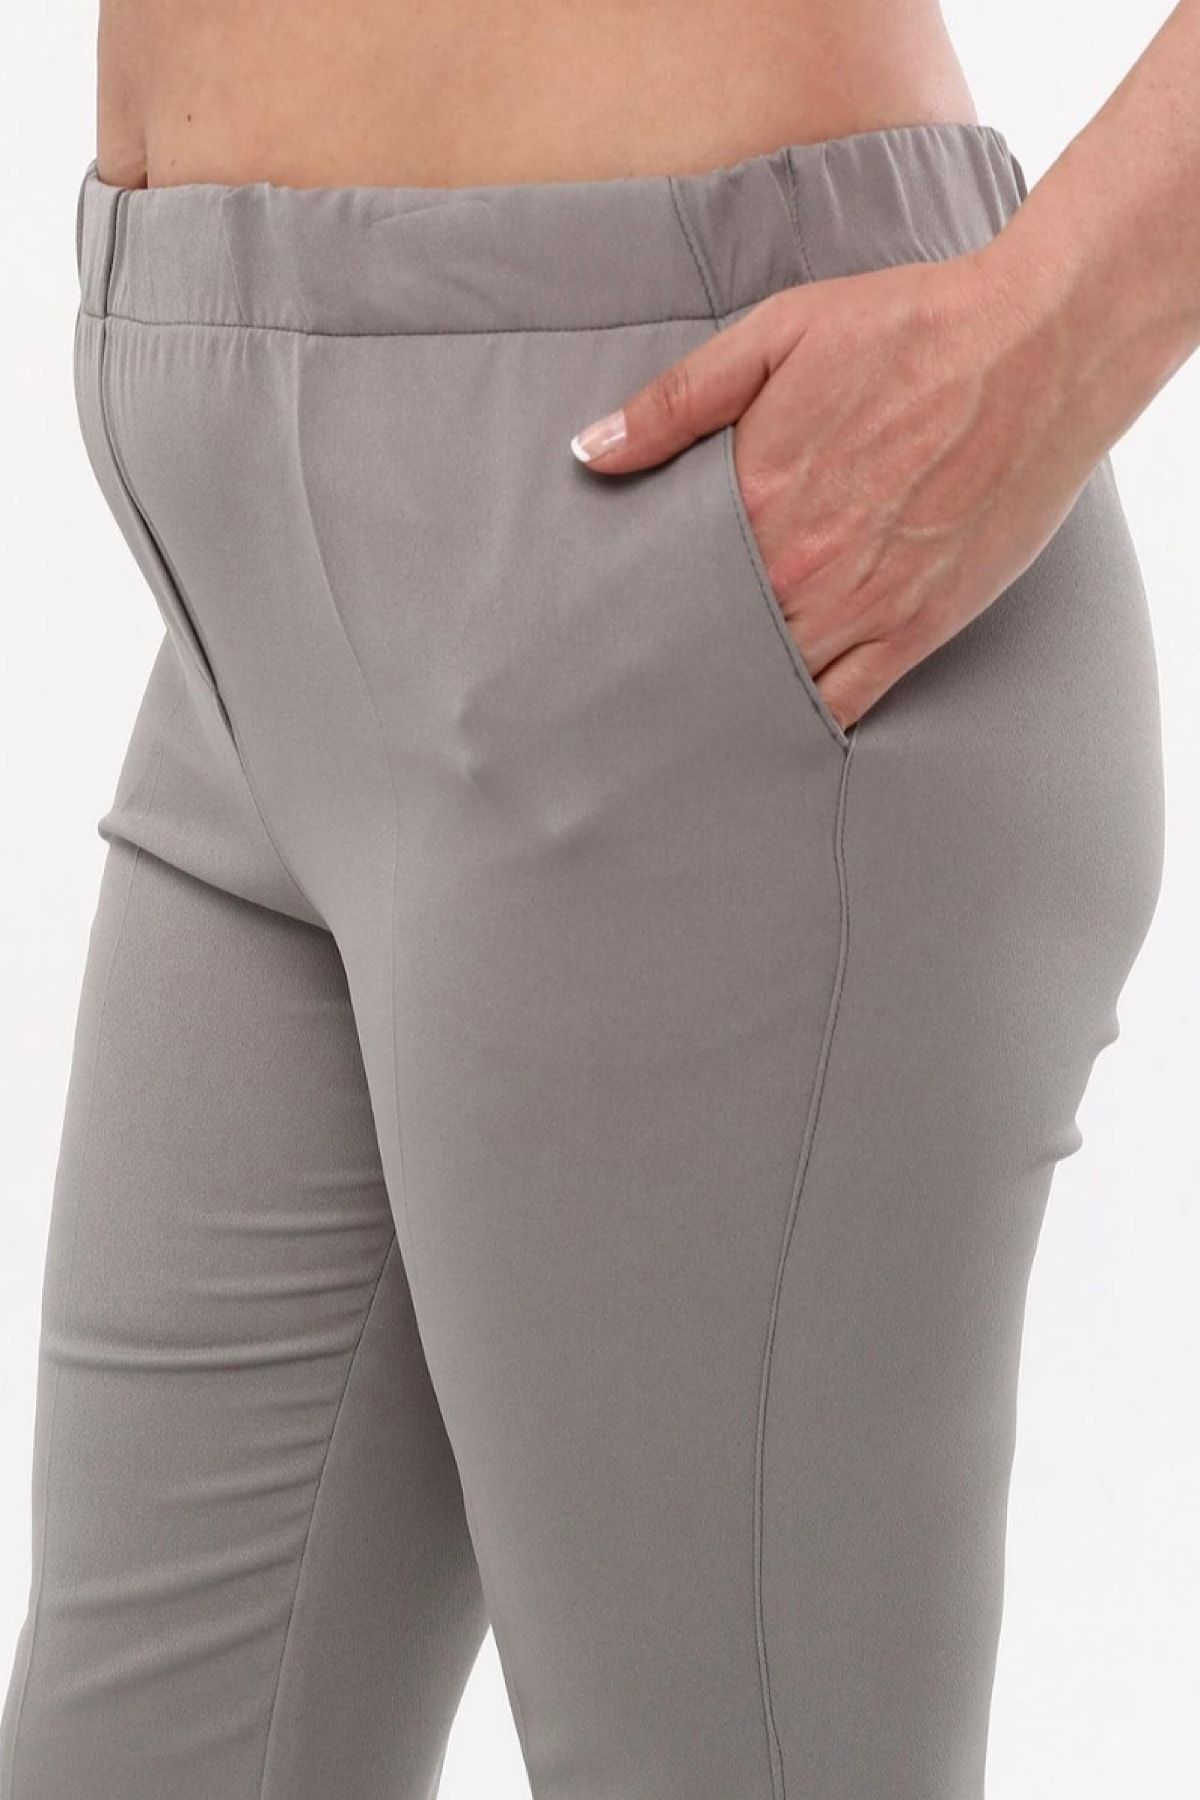 YMNEYL Collections Büyük Beden Gri Renk Beli Lastikli Kumaş Pantolon Süper Kalite